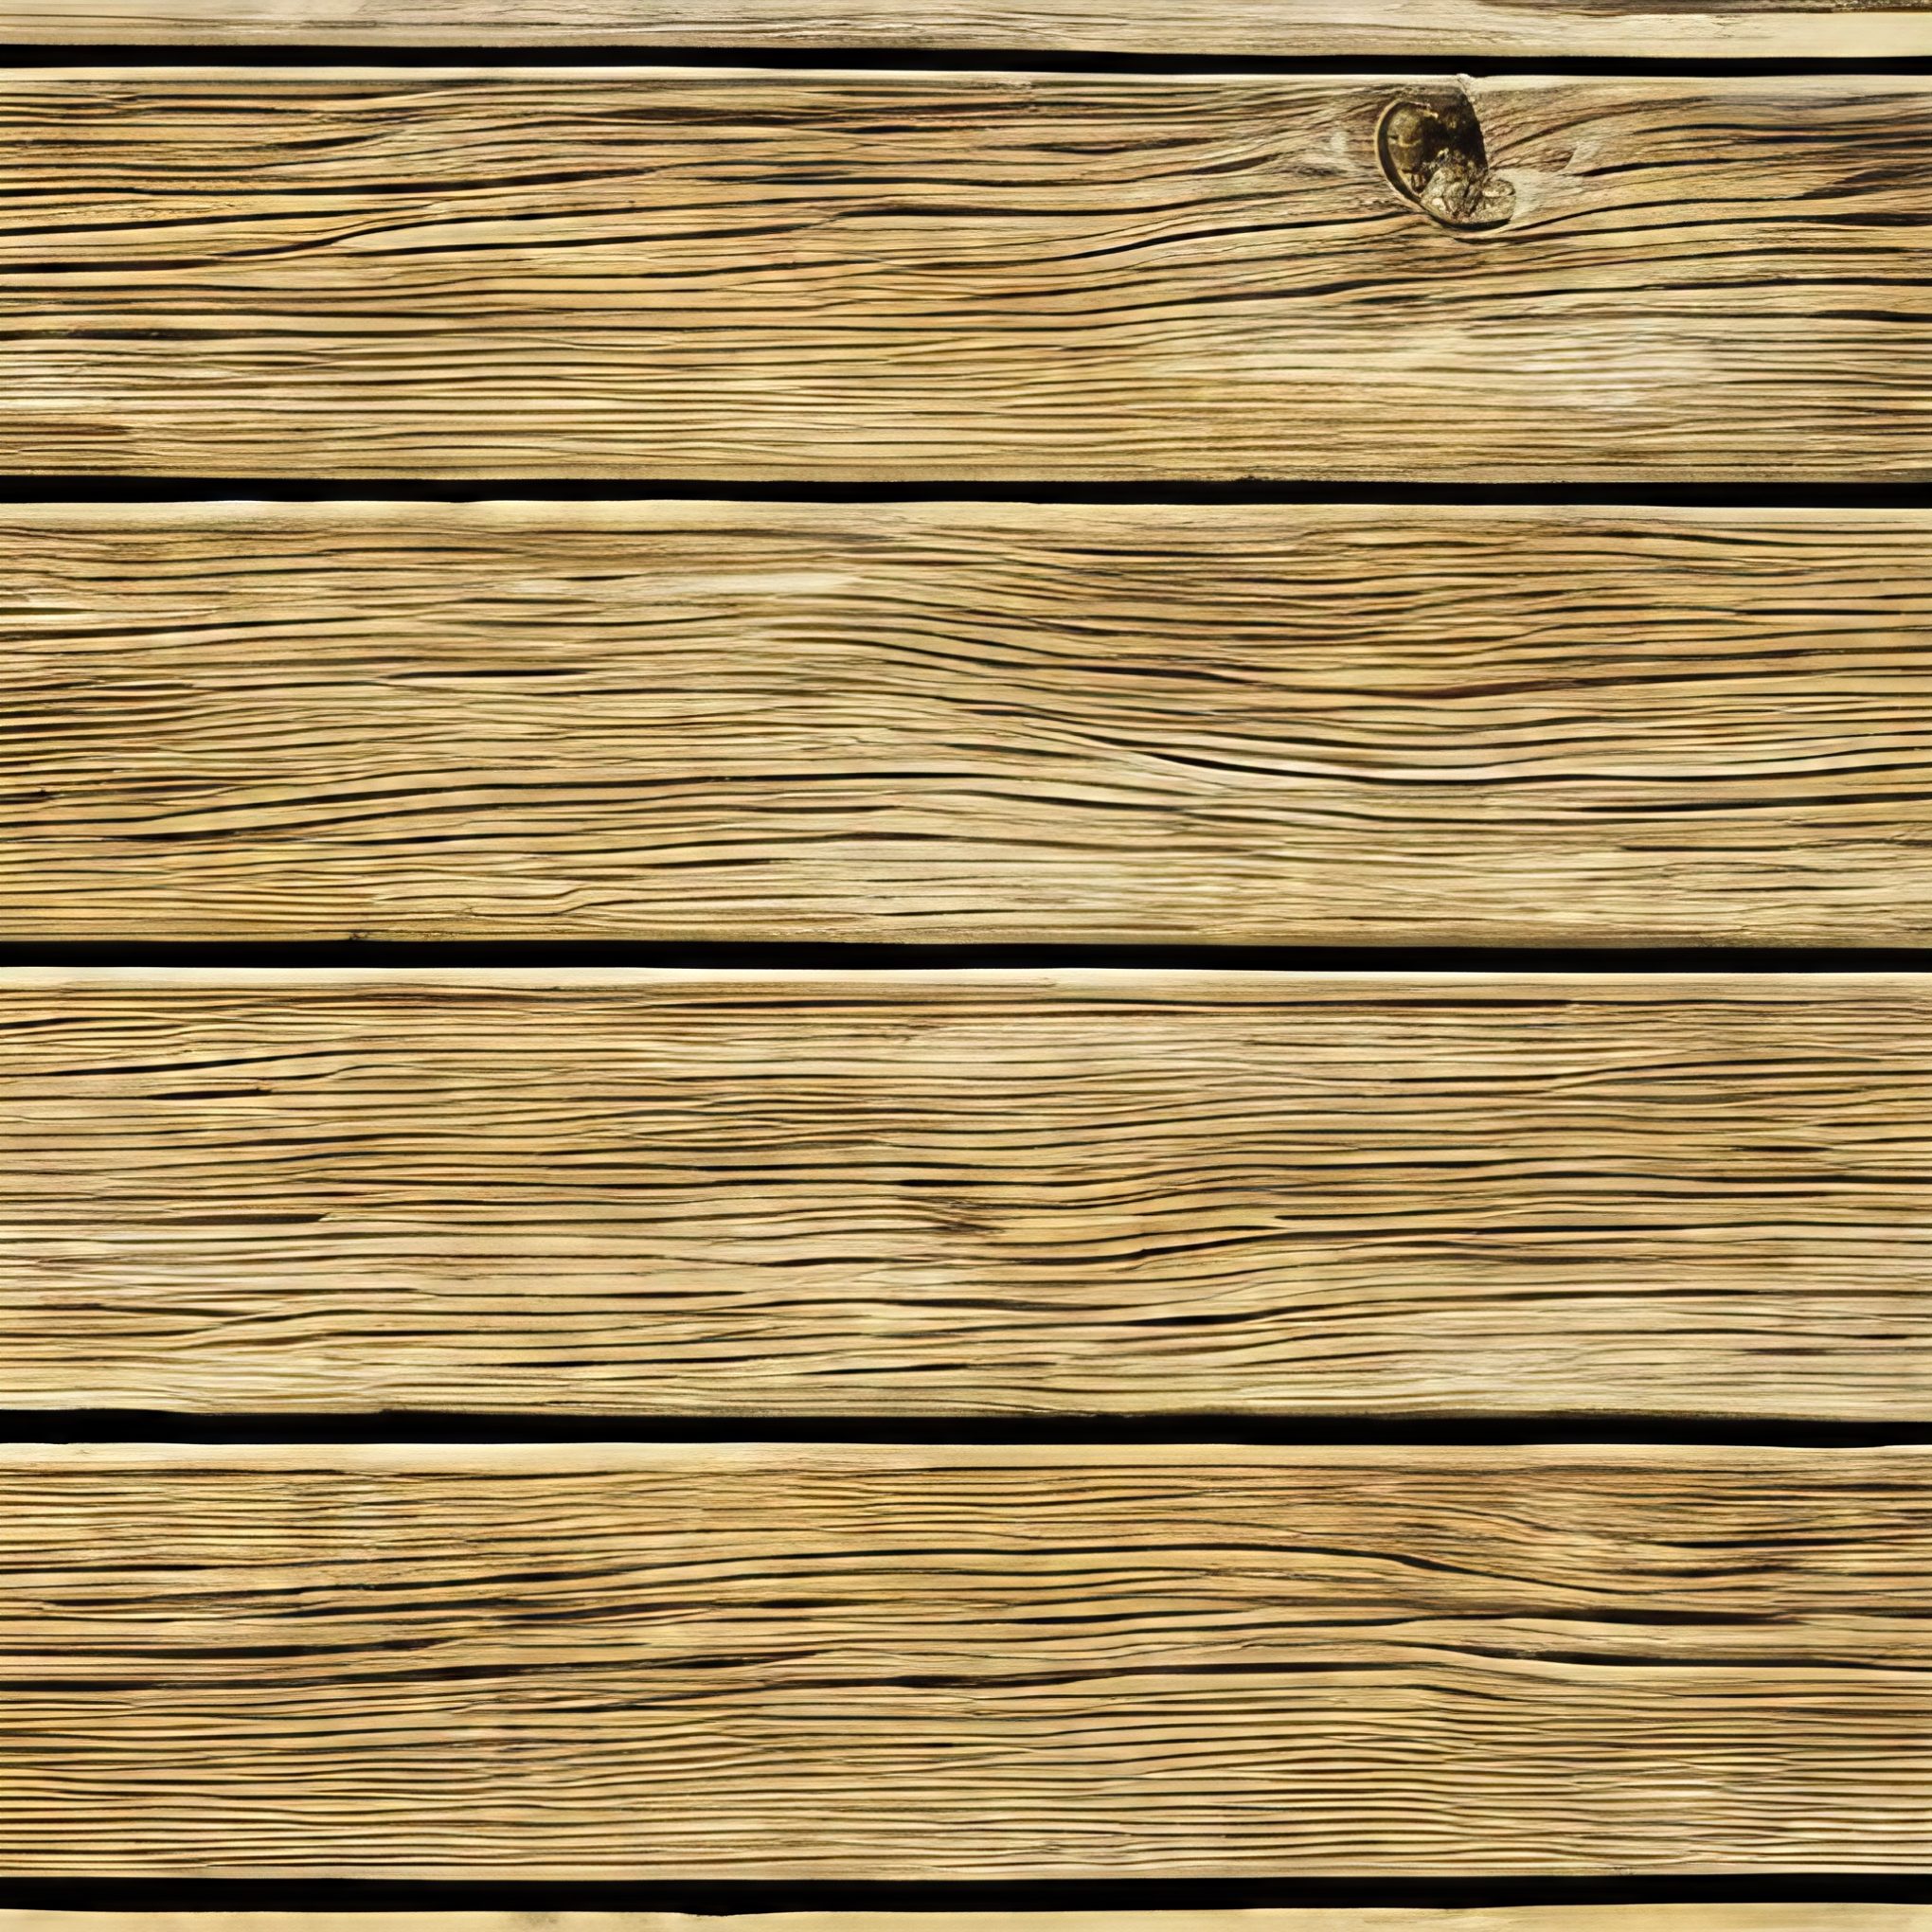 Wooden Floorboard Planks Background Free Photo Download